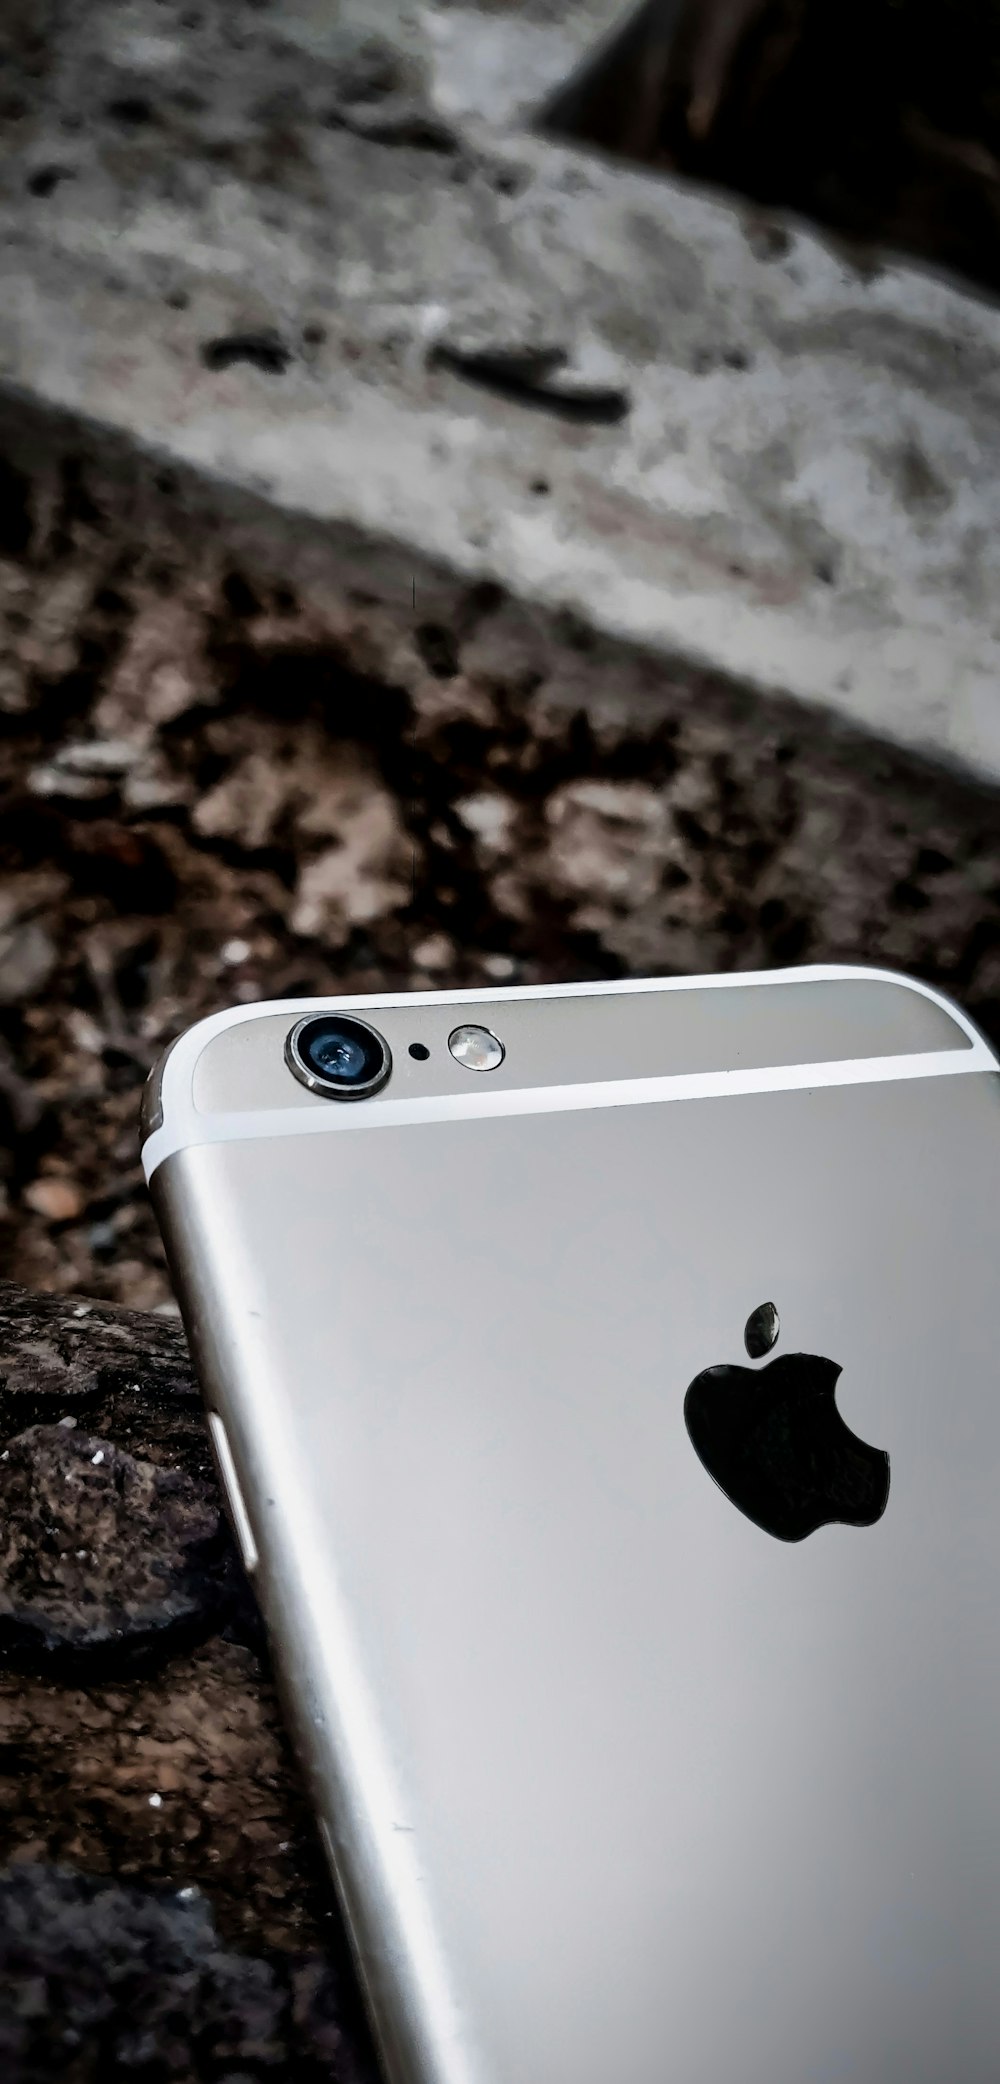 Silver iPhone 6 photo – Free Grey Image on Unsplash